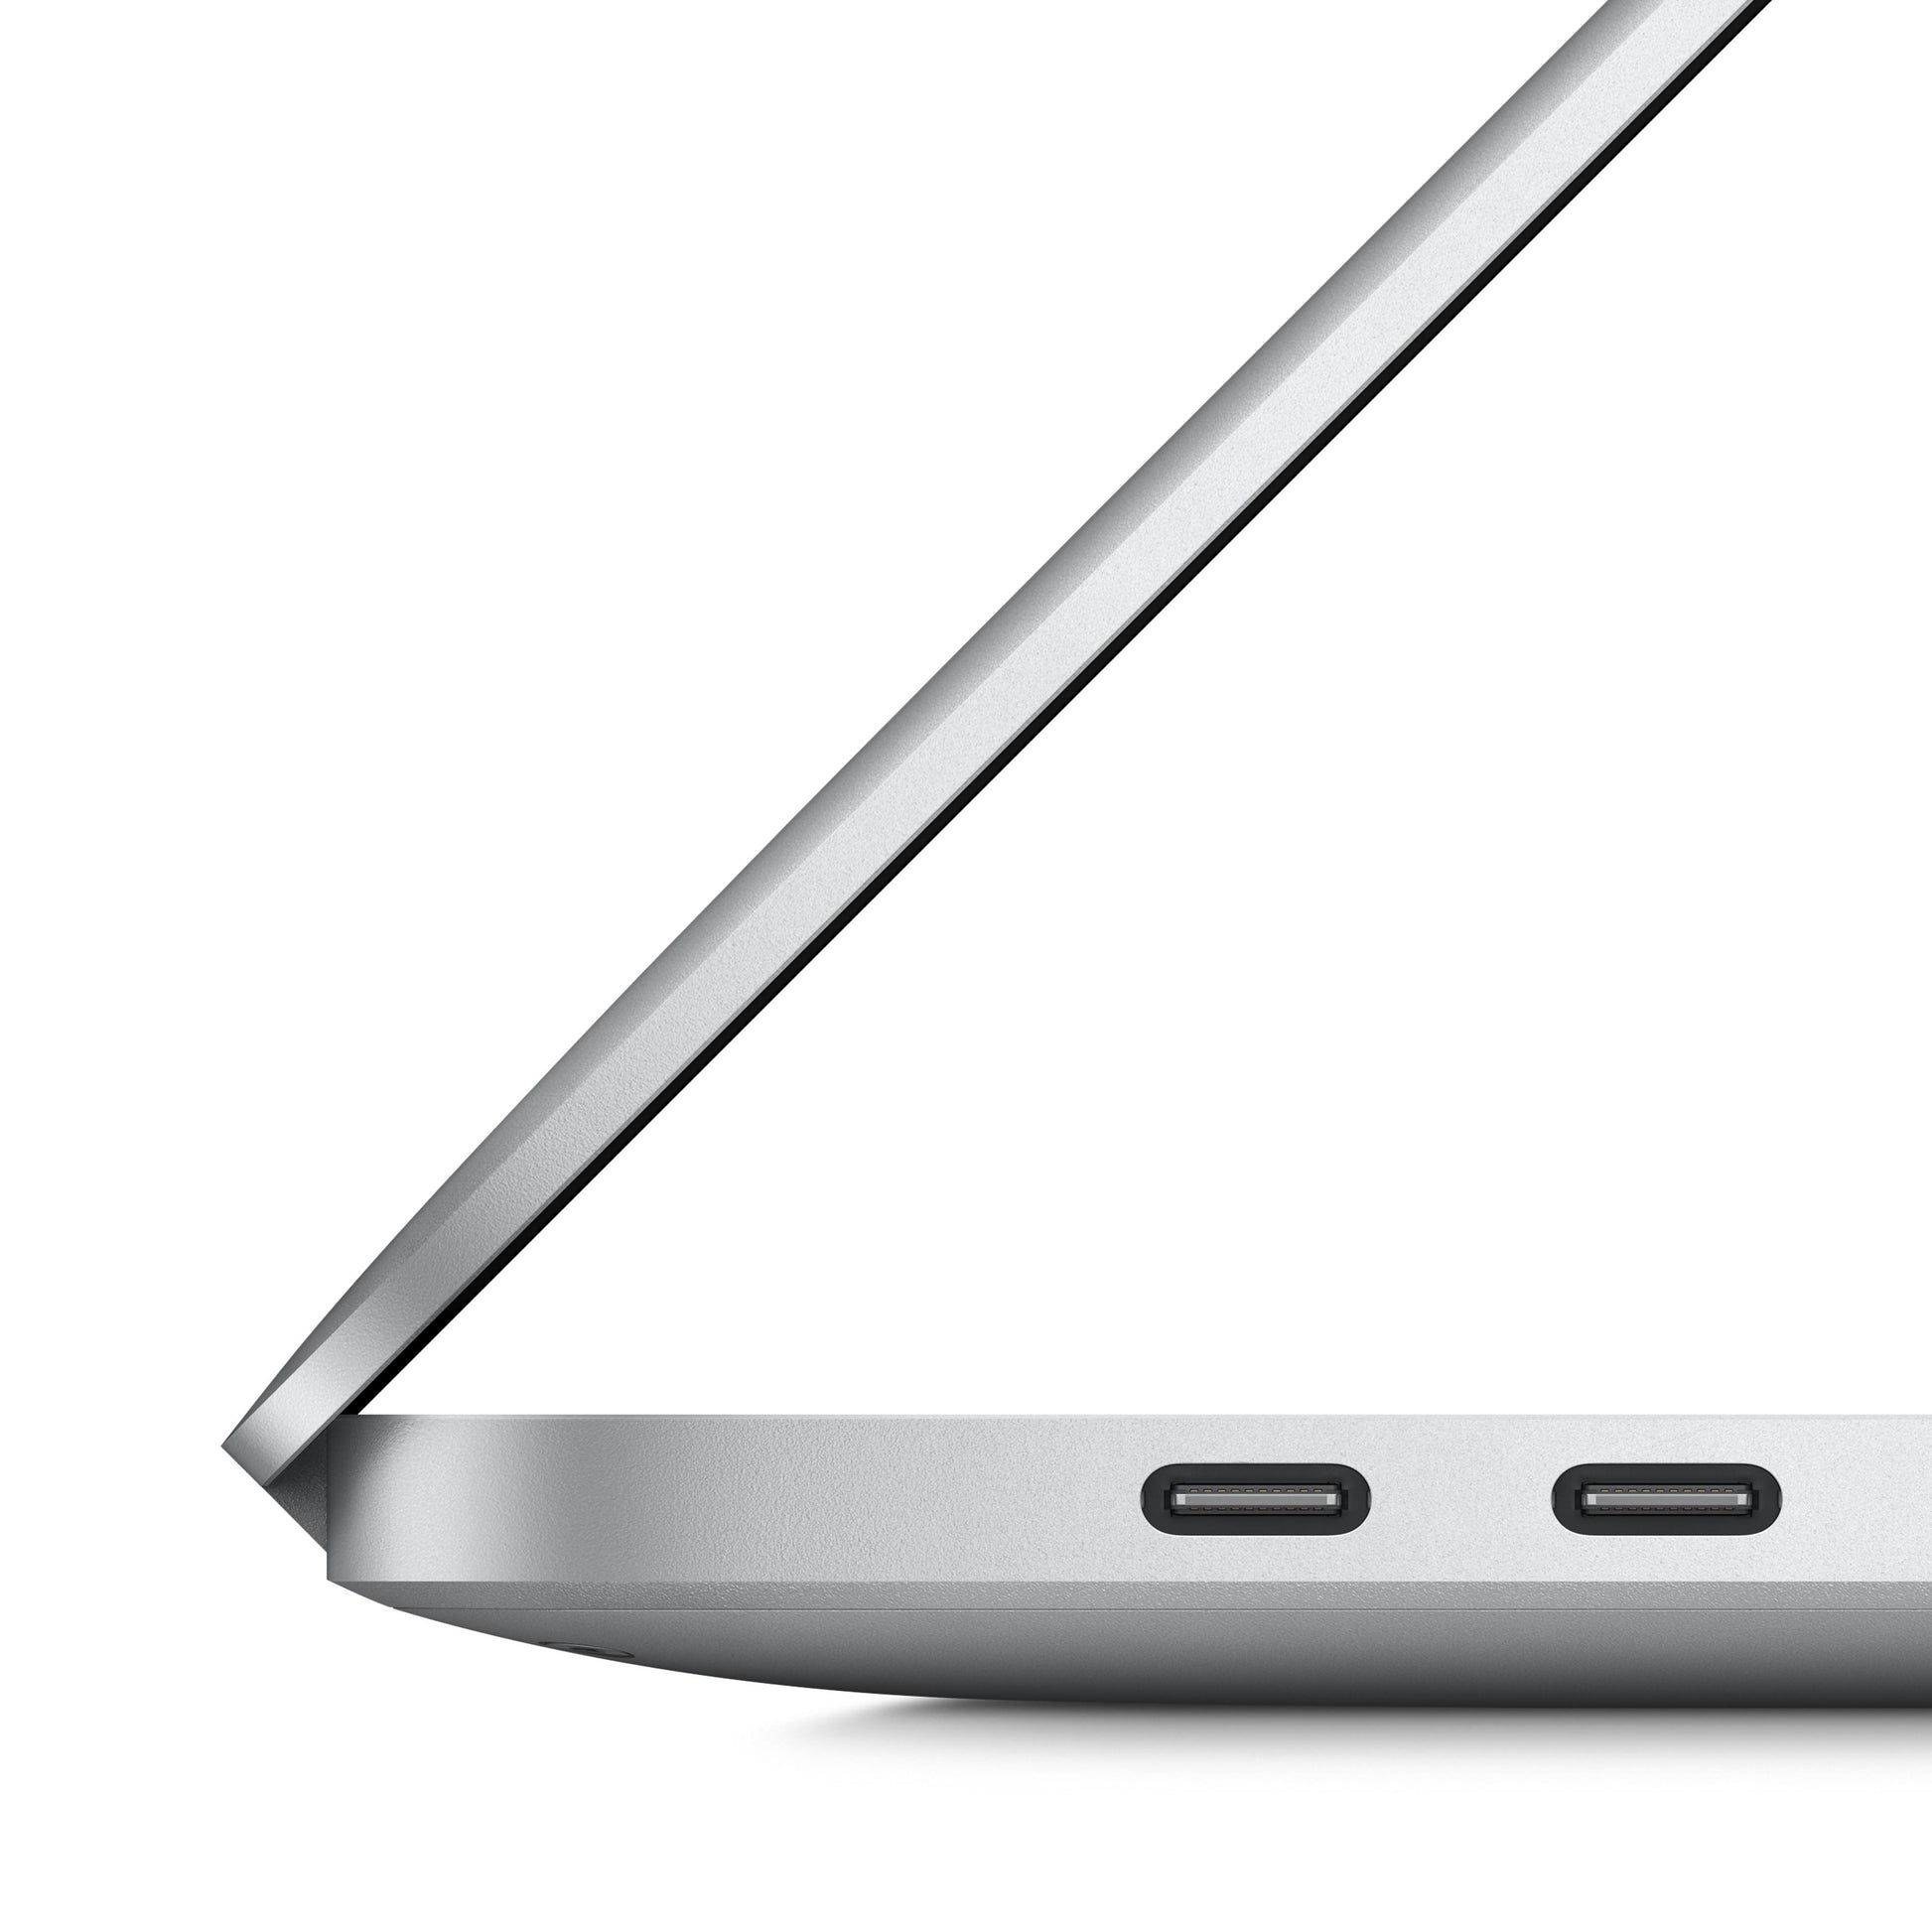 apple-2019-16-inch-macbook-pro-touchbar-a2141-silver-6ci7 - 2.6ghz processor, 16gb ram, 5500m - 4gb gpu-mvvl2ll/a-5